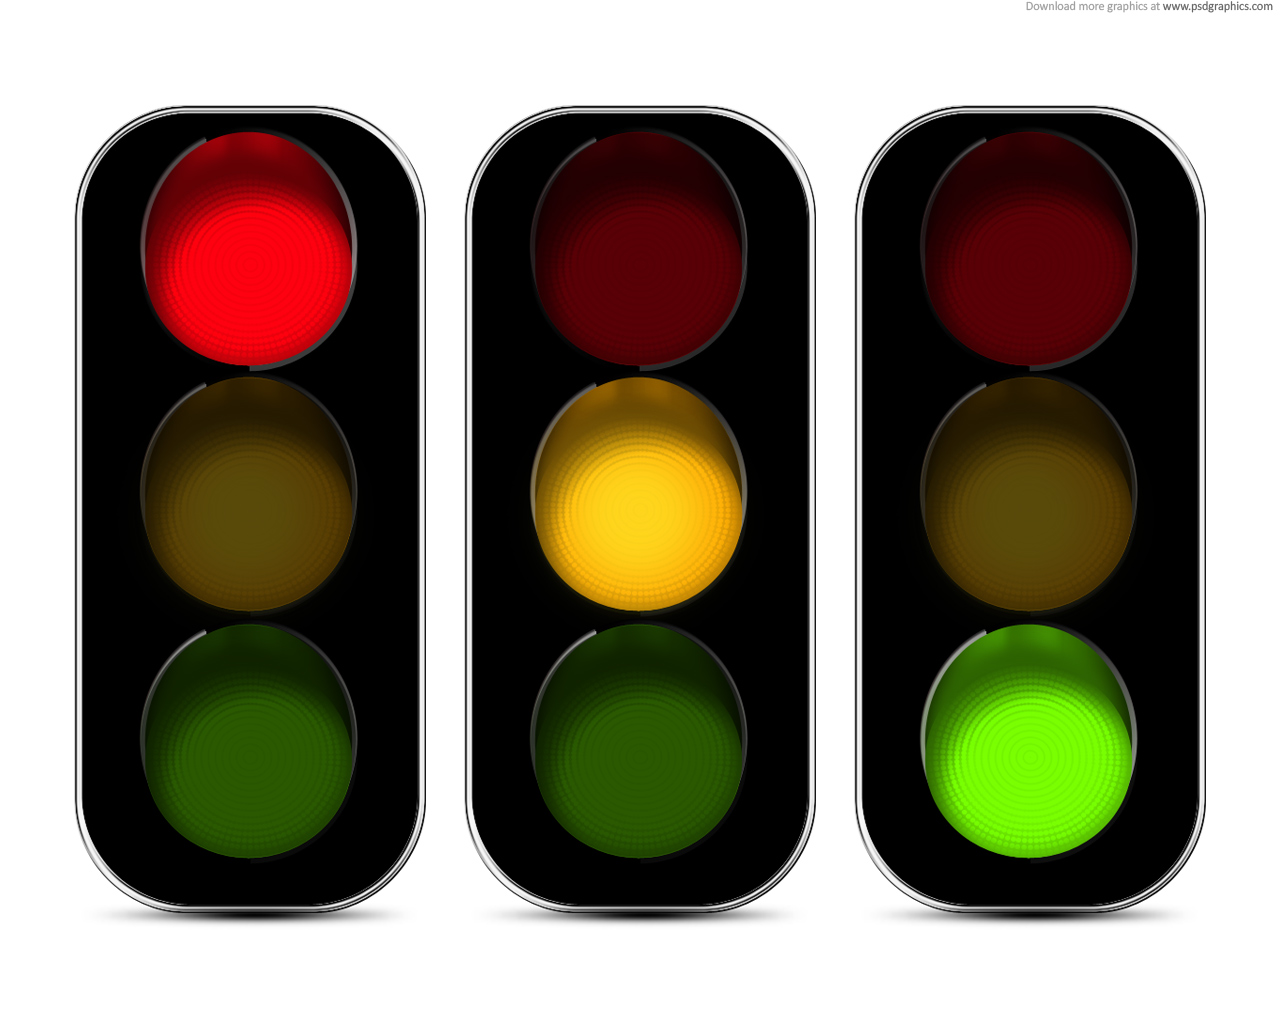 Traffic Light On Red - ClipArt Best